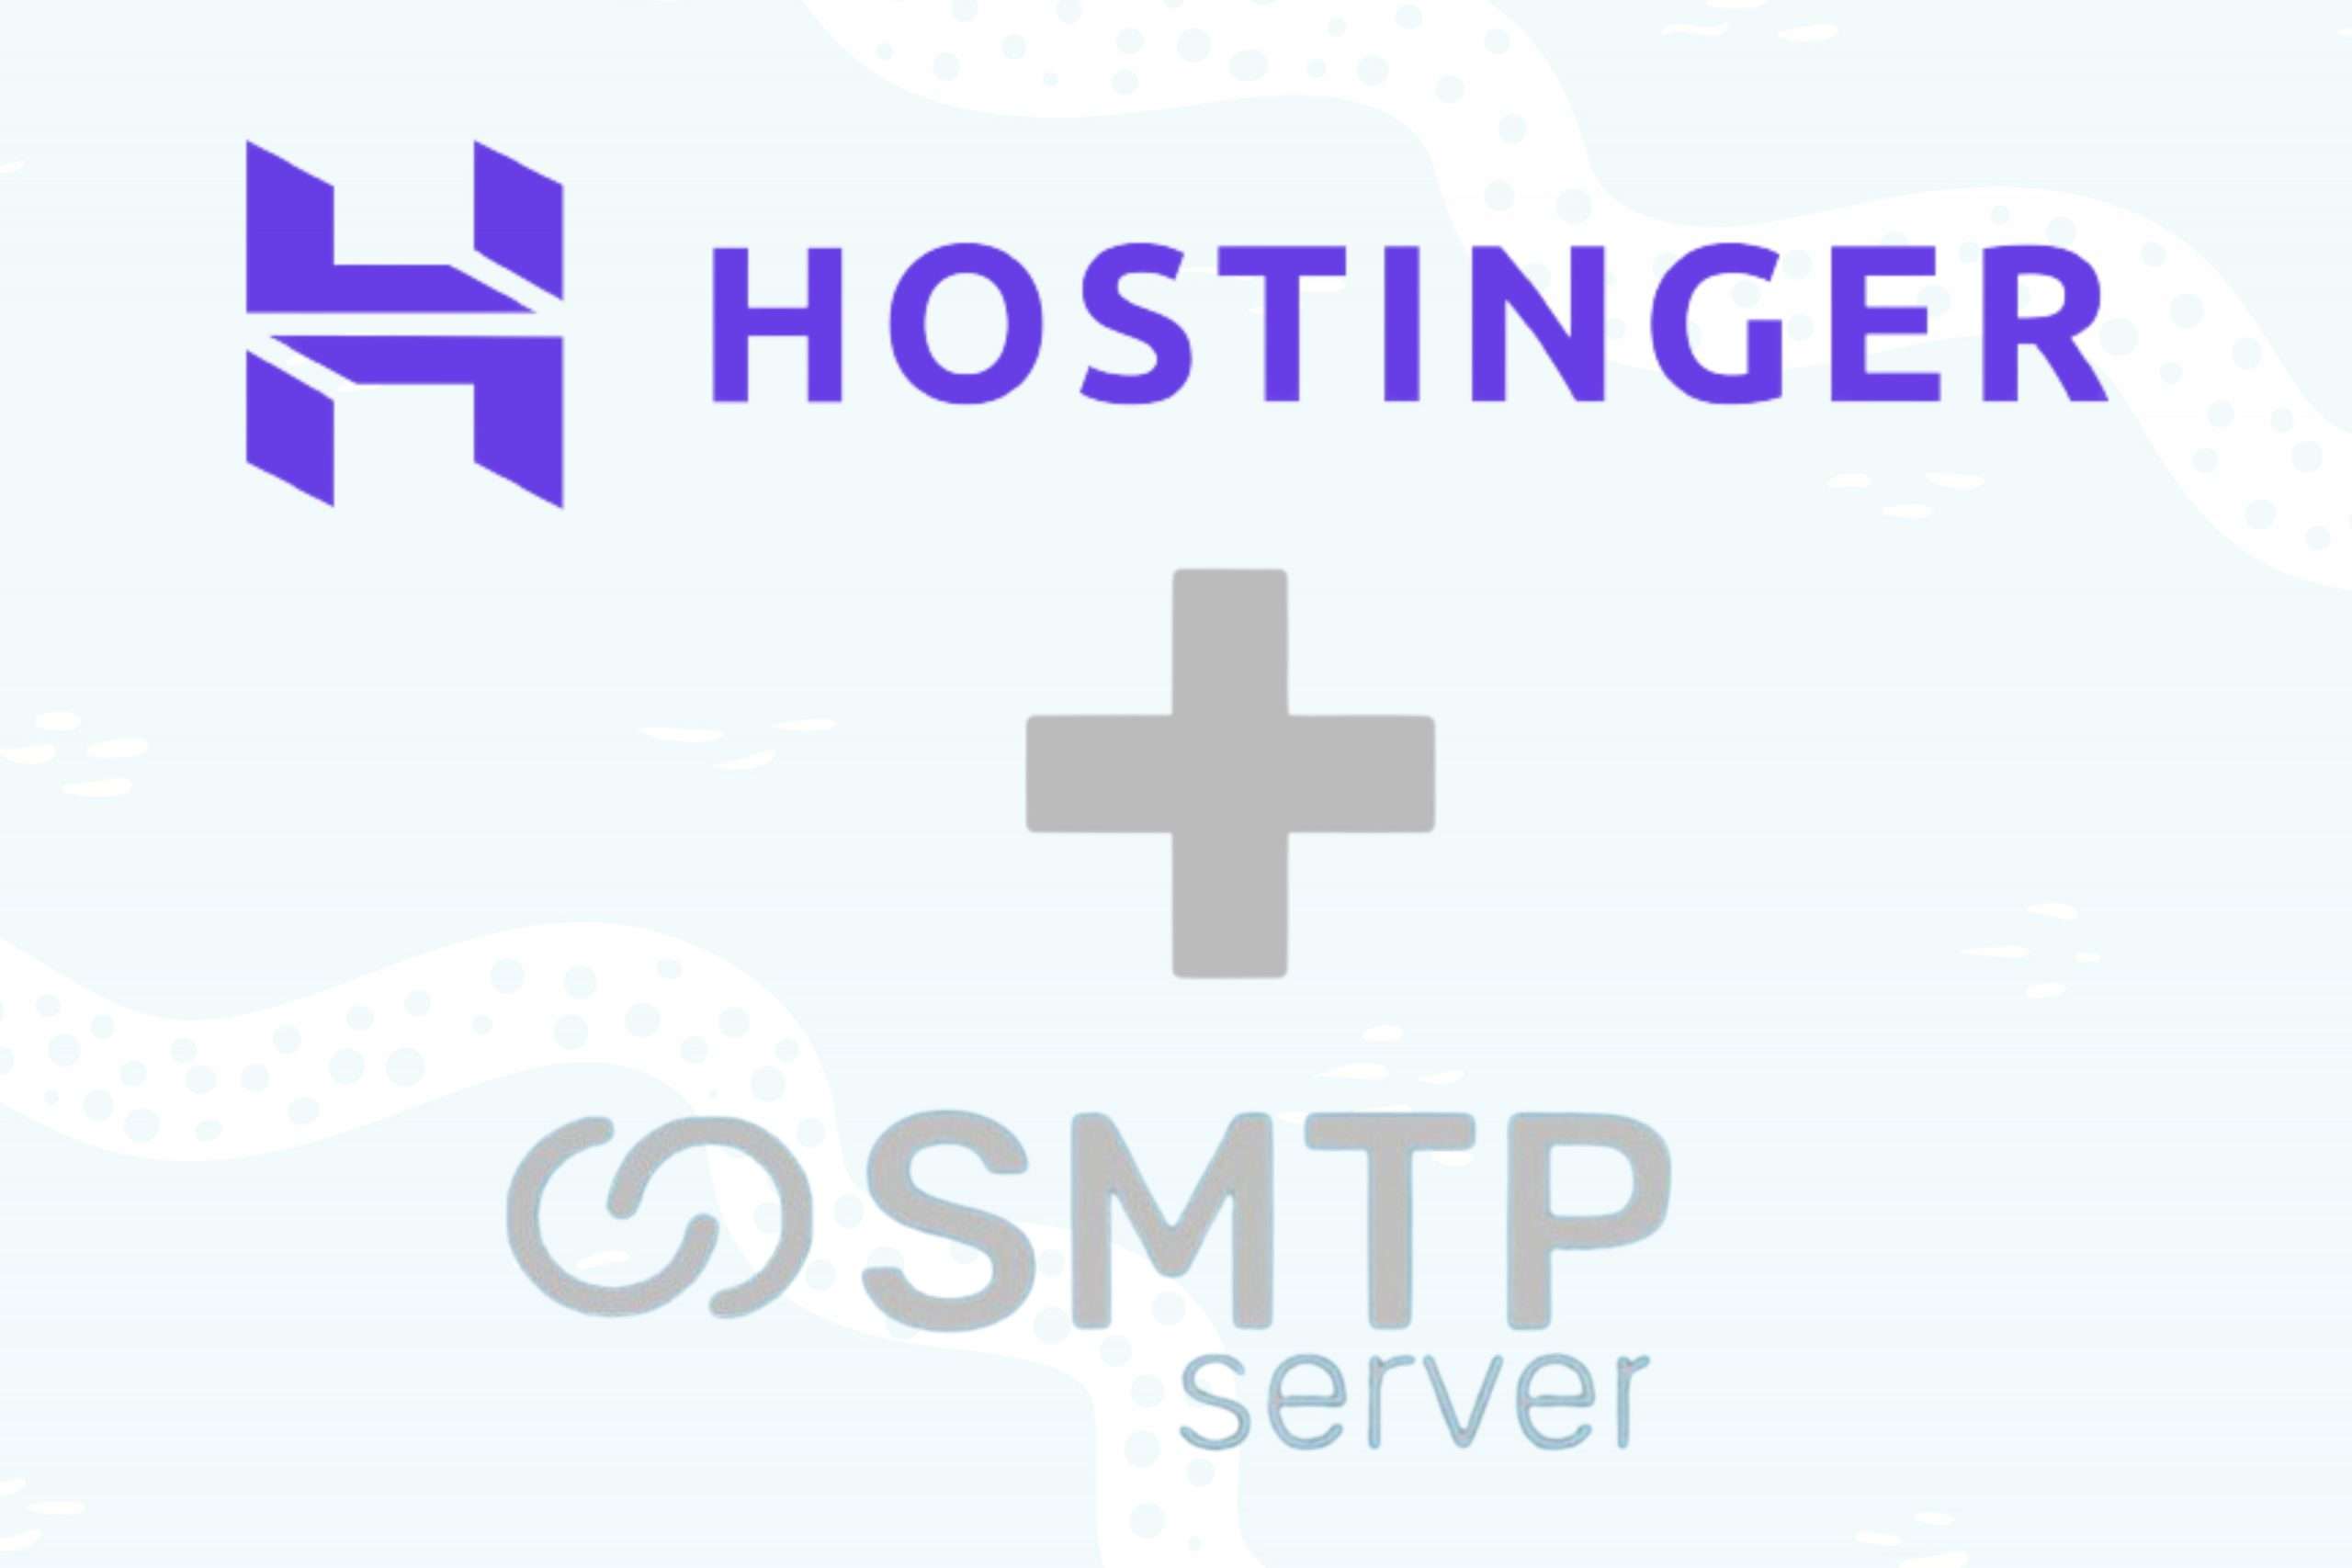 How To Setup SMTPServer with HOSTINGER